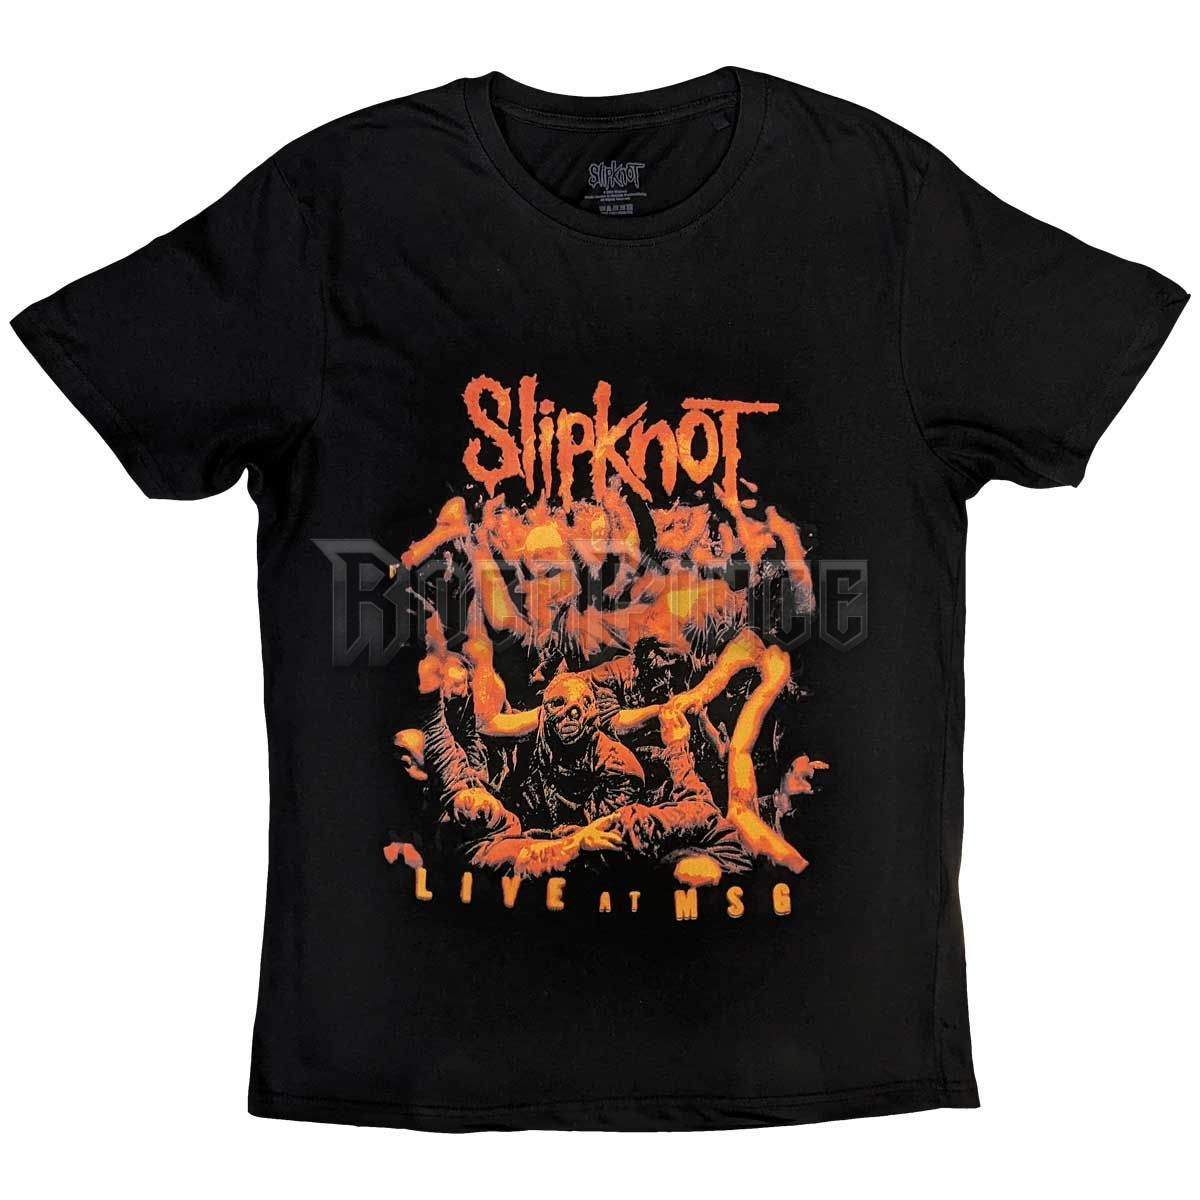 Slipknot - Live at MSG Orange - unisex póló - SKTS142MB